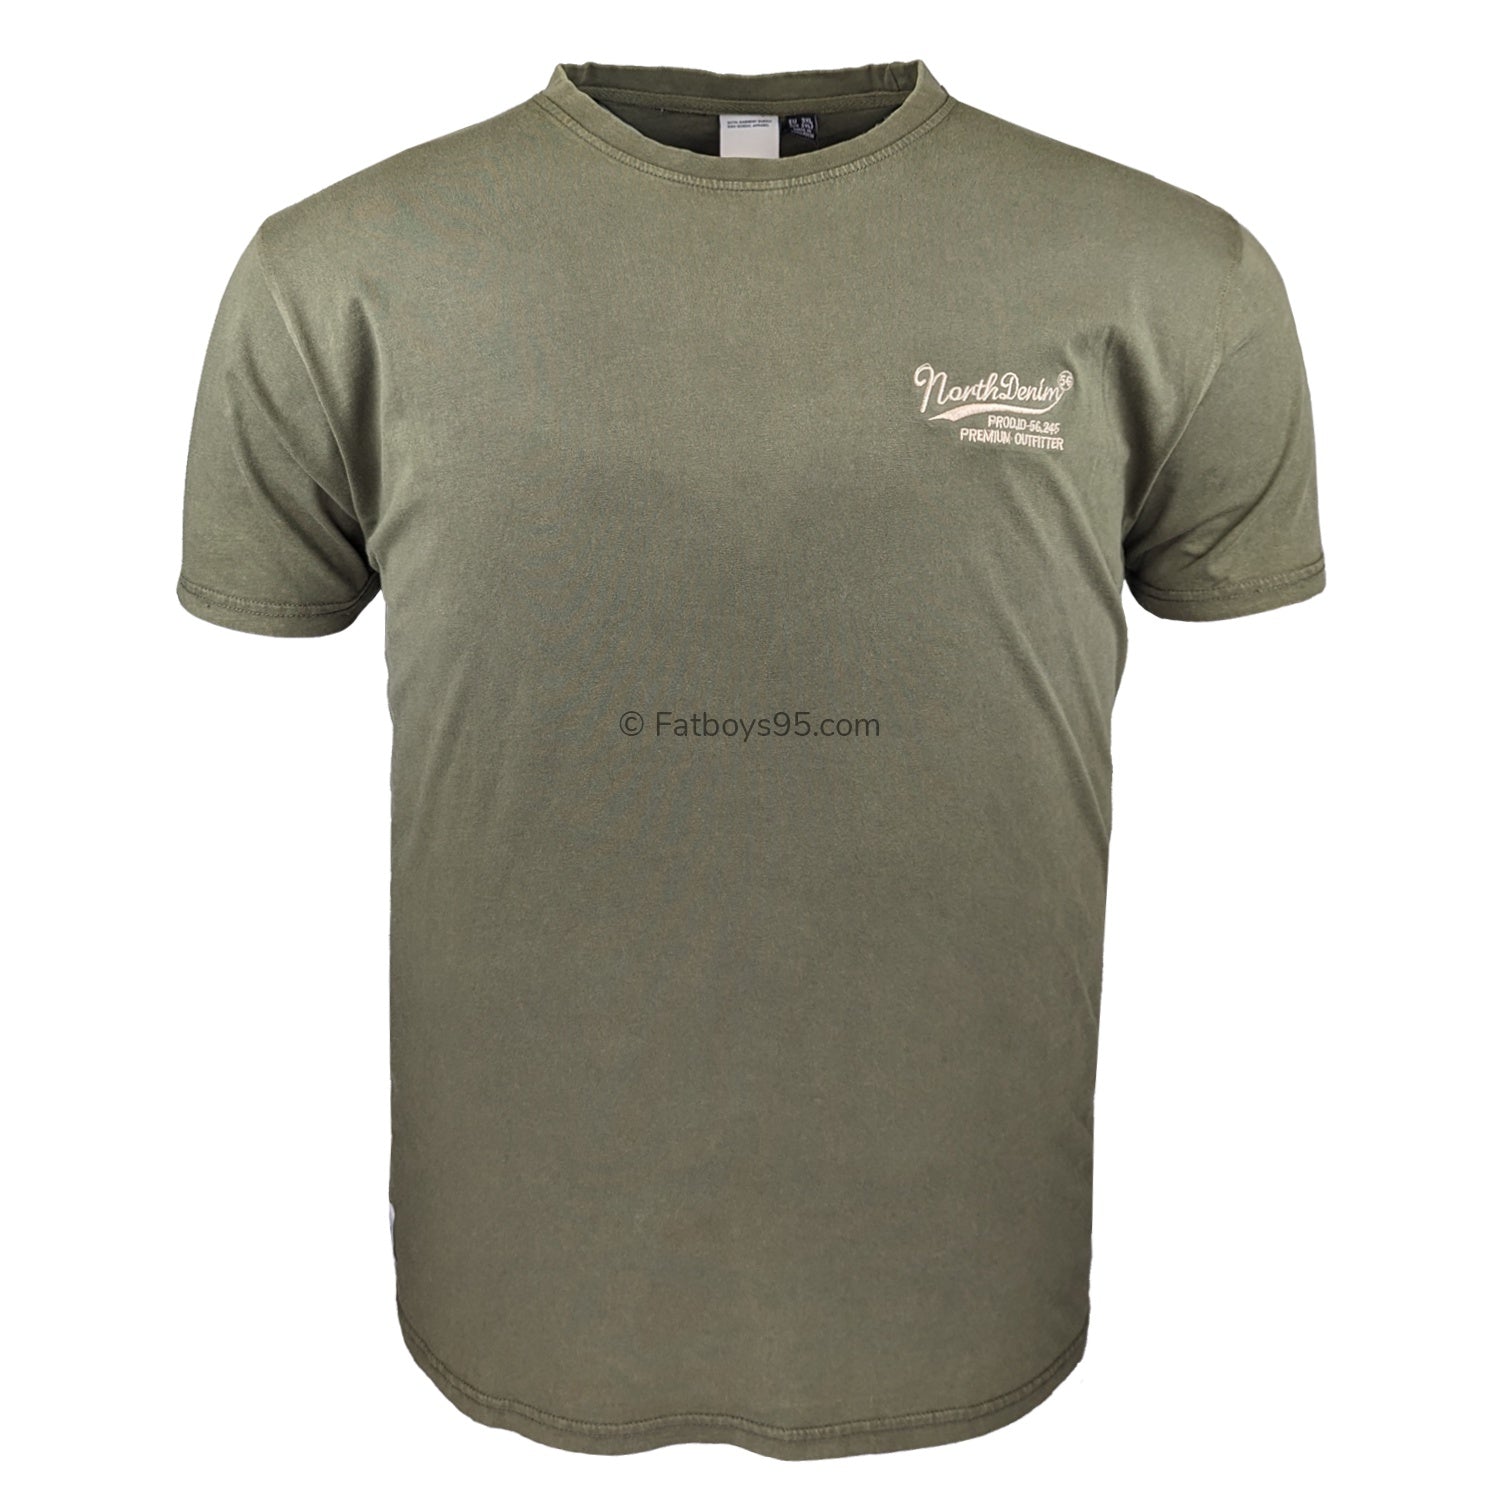 North 56Denim T-Shirt - 41330 - Dusty Olive Green